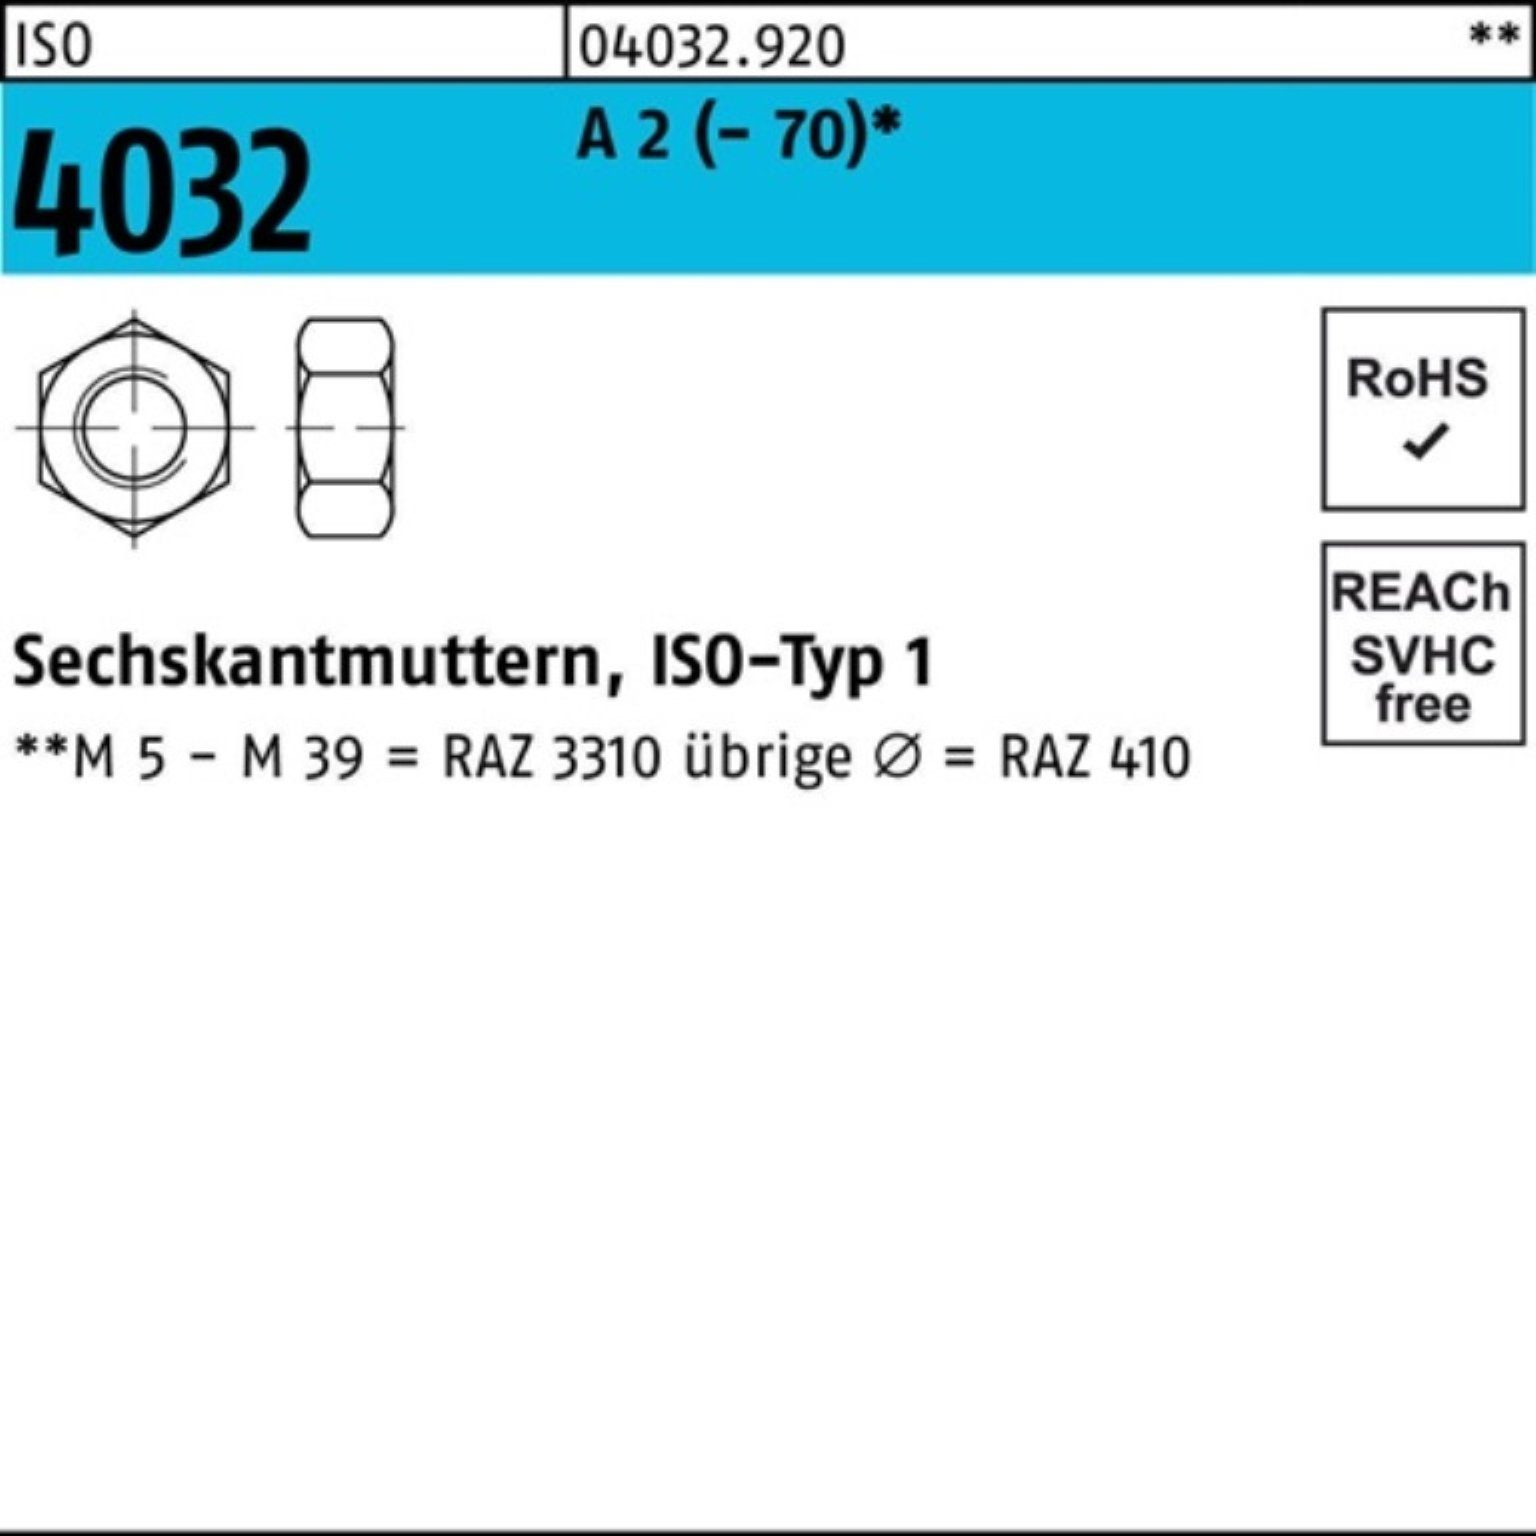 Bufab Muttern 100er Pack Sechskantmutter ISO 4032 M20 A 2 (70) 25 Stück ISO 4032